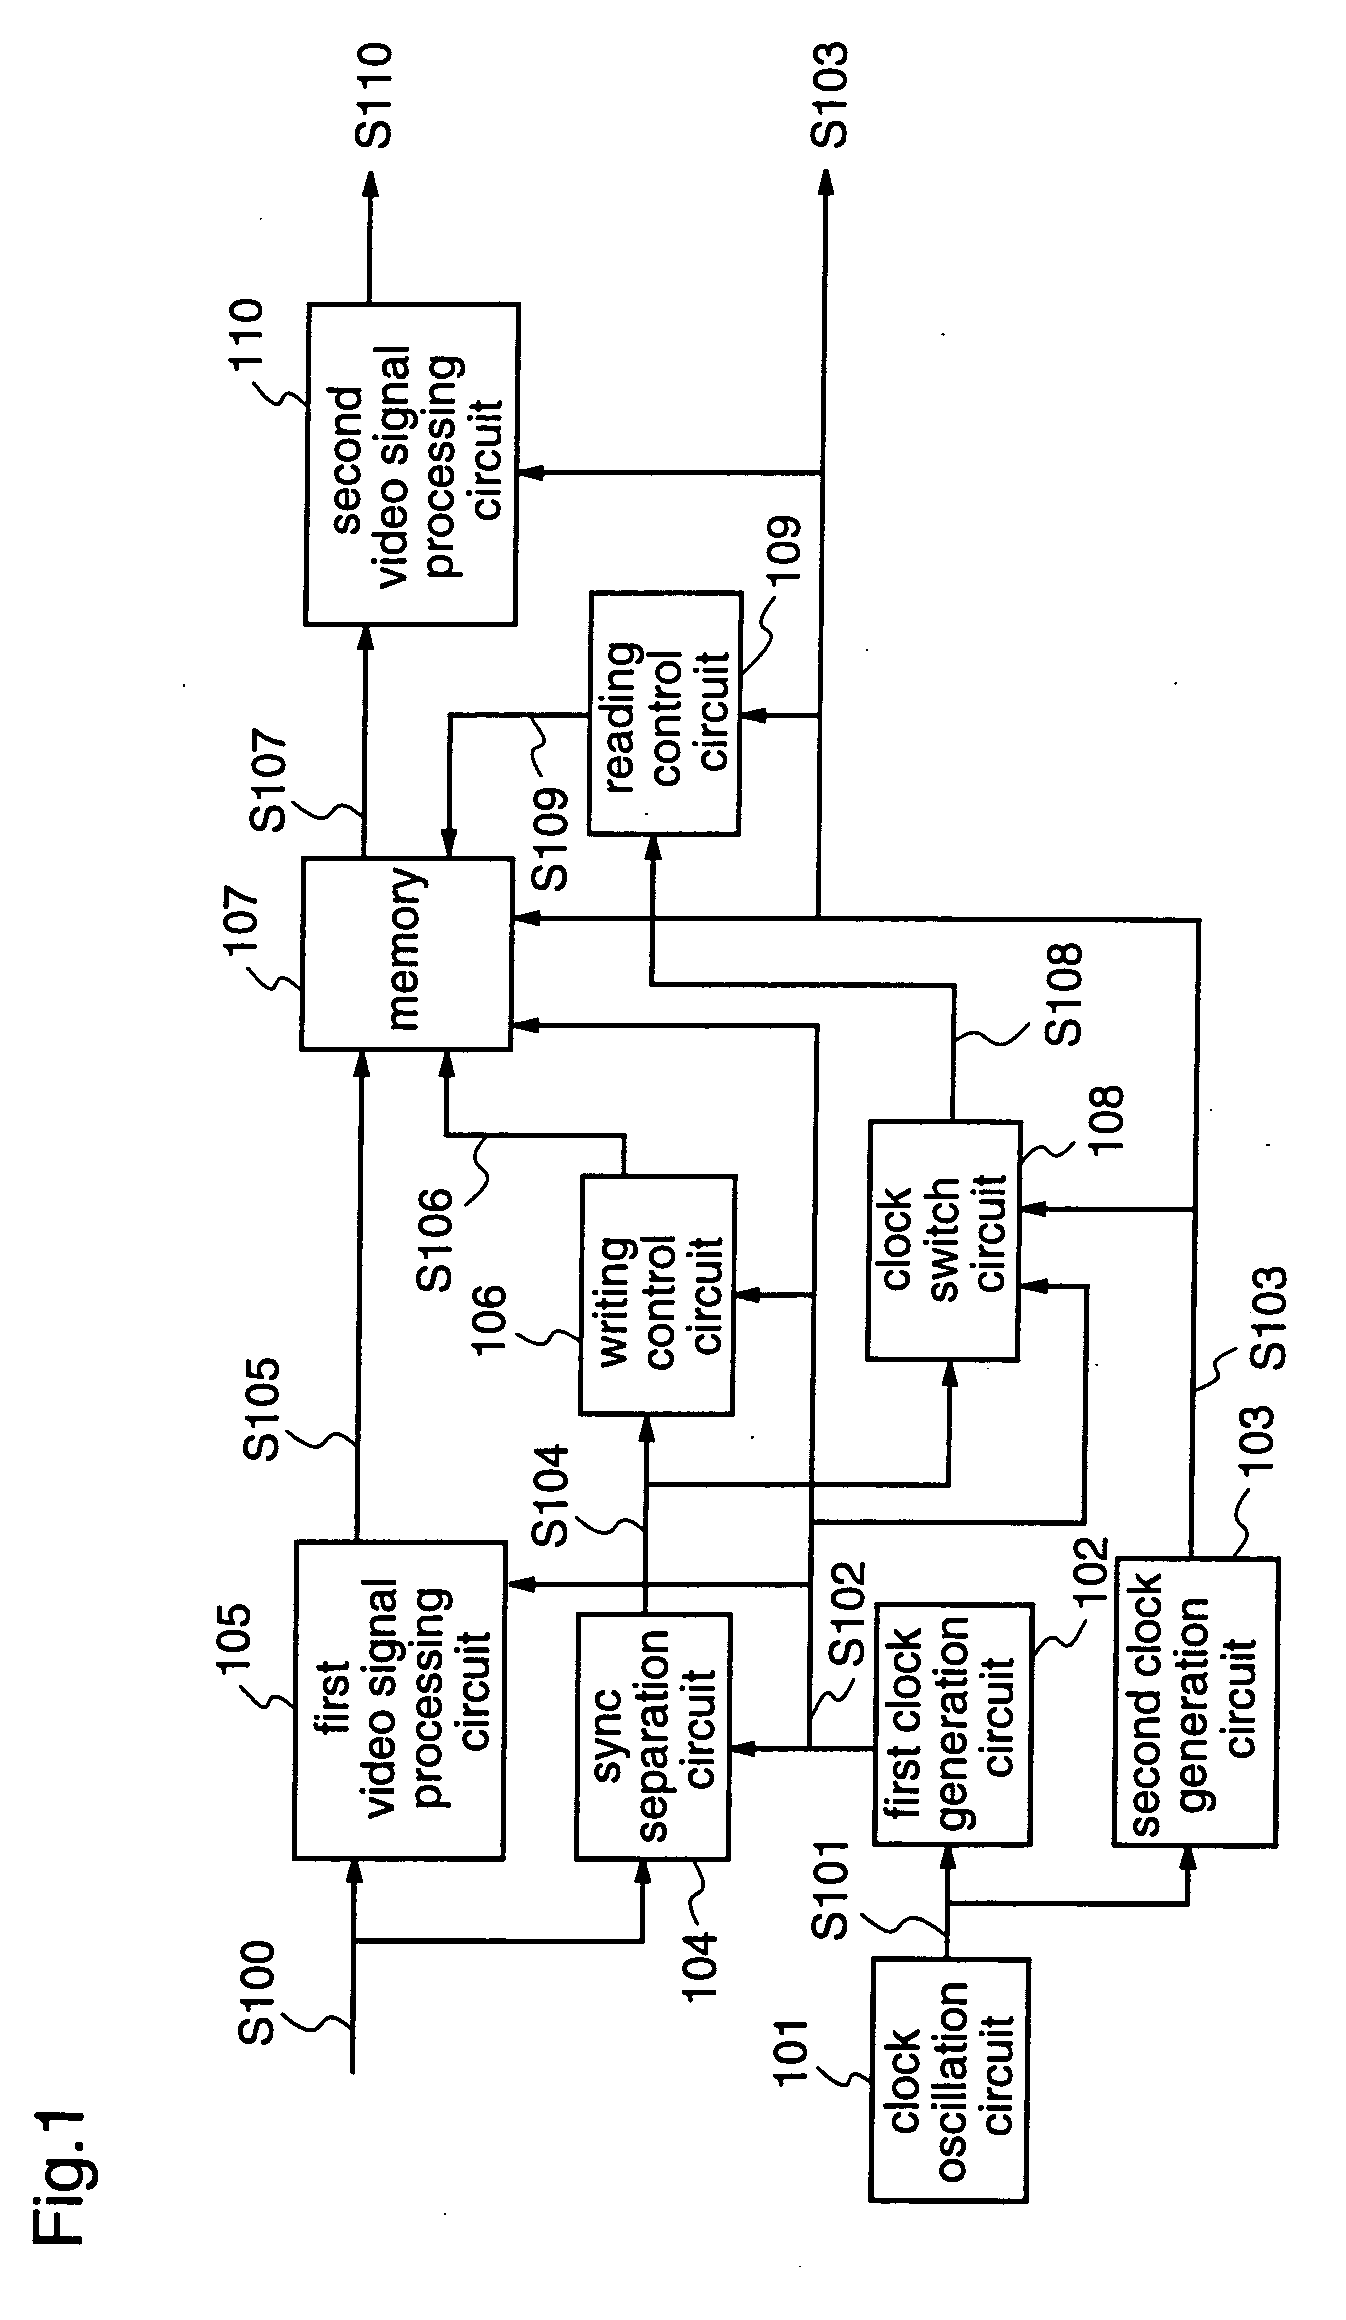 Video signal processing apparatus